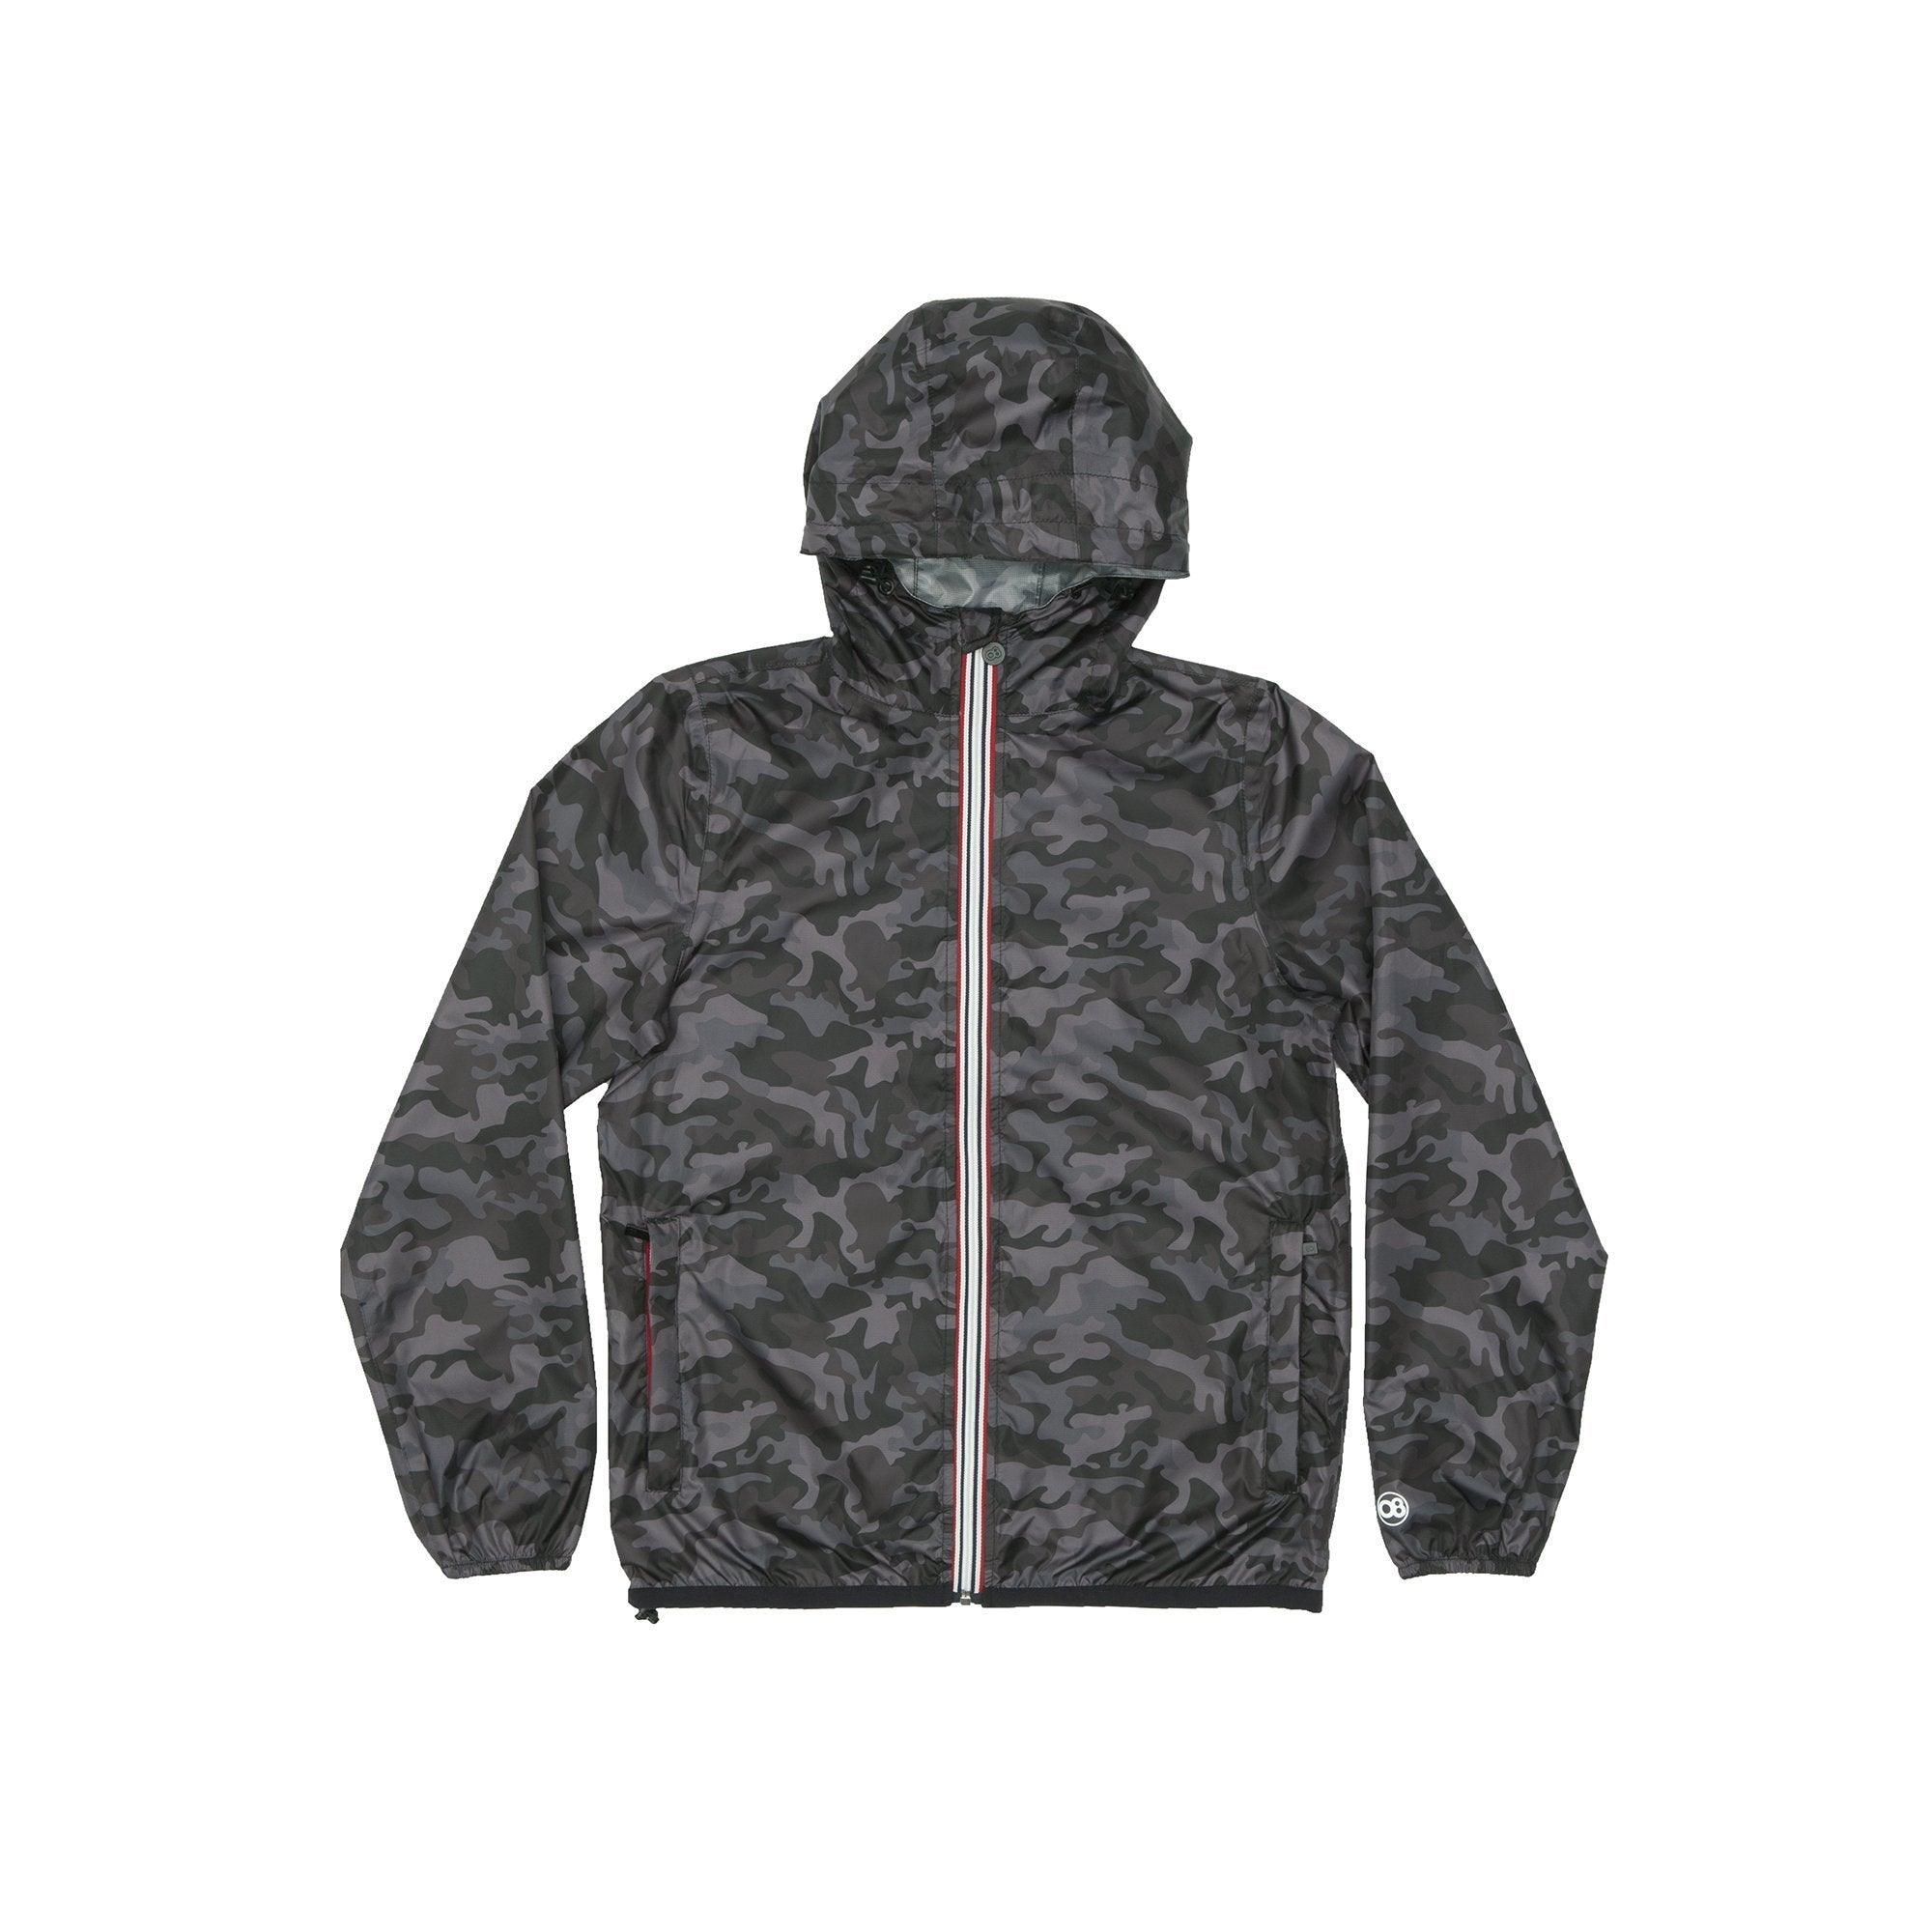 Black camo full zip packable rain jacket and windbreaker - VirtuousWares:Global